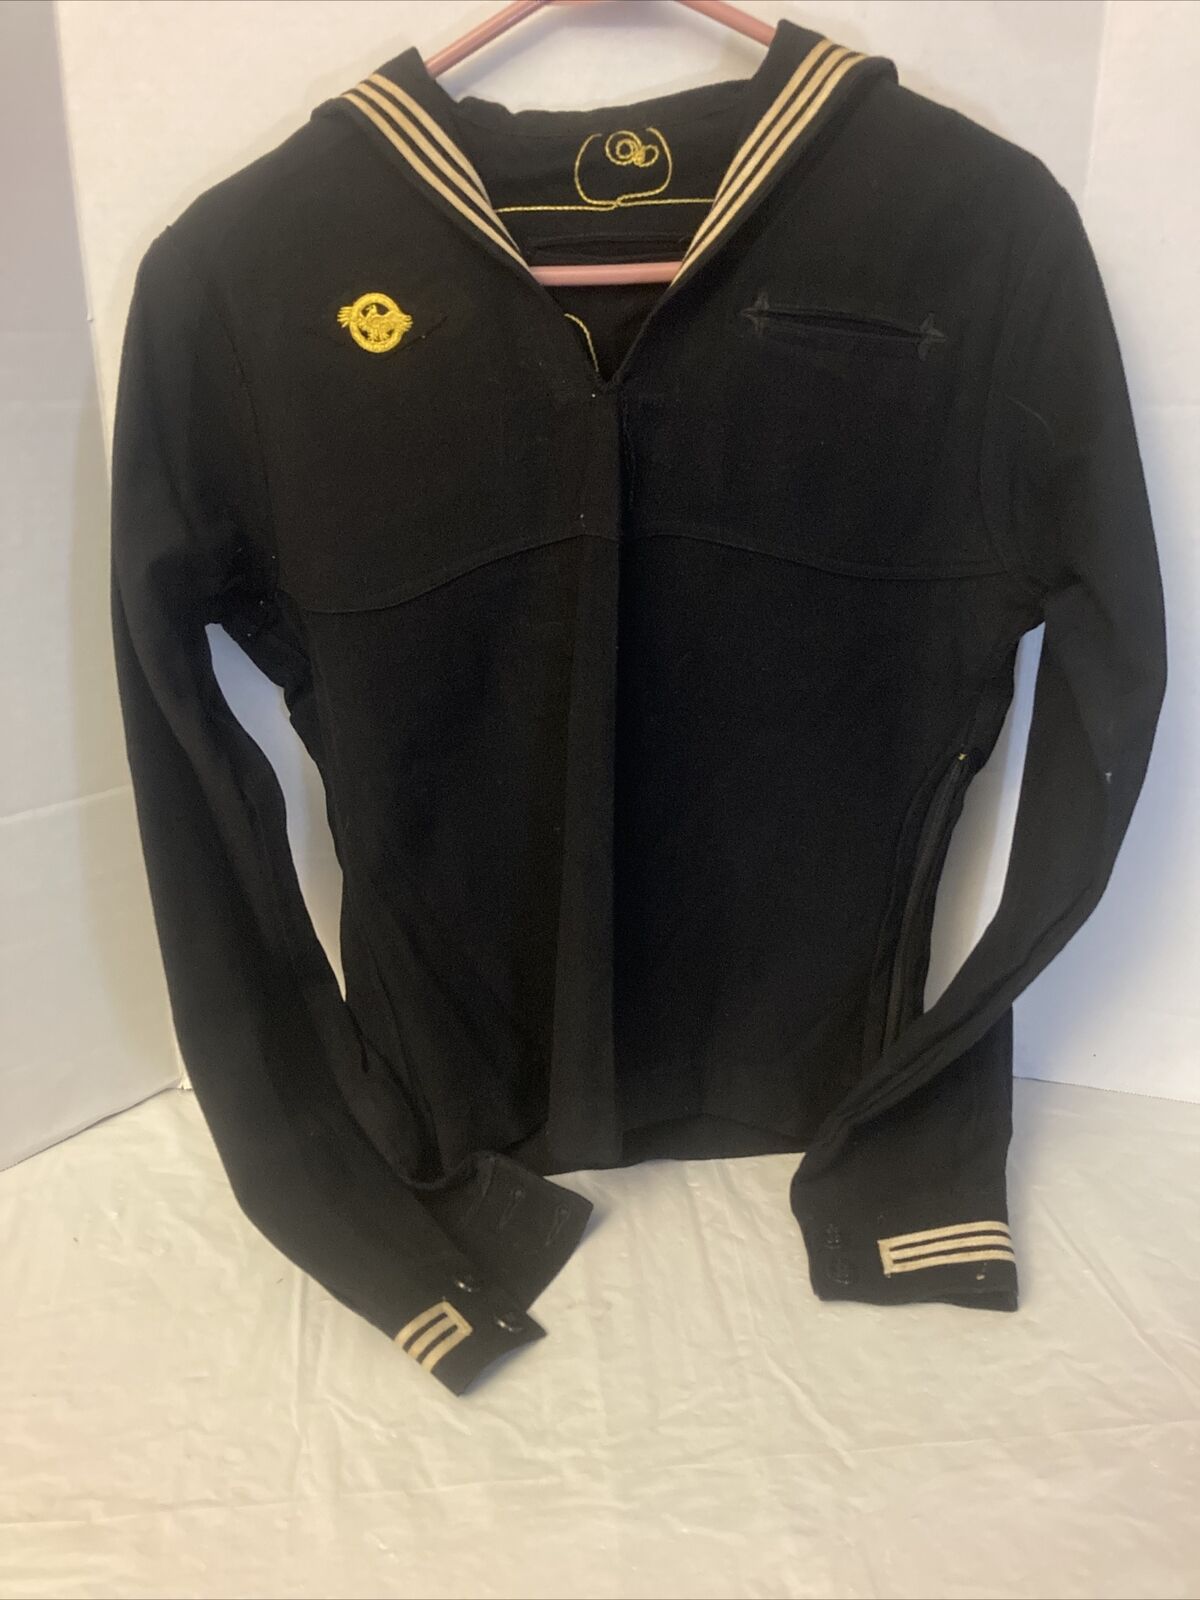 VTG US Navy Dress Wool Cracker Jack Top Sailor Uniform Size Unknown Looks Small